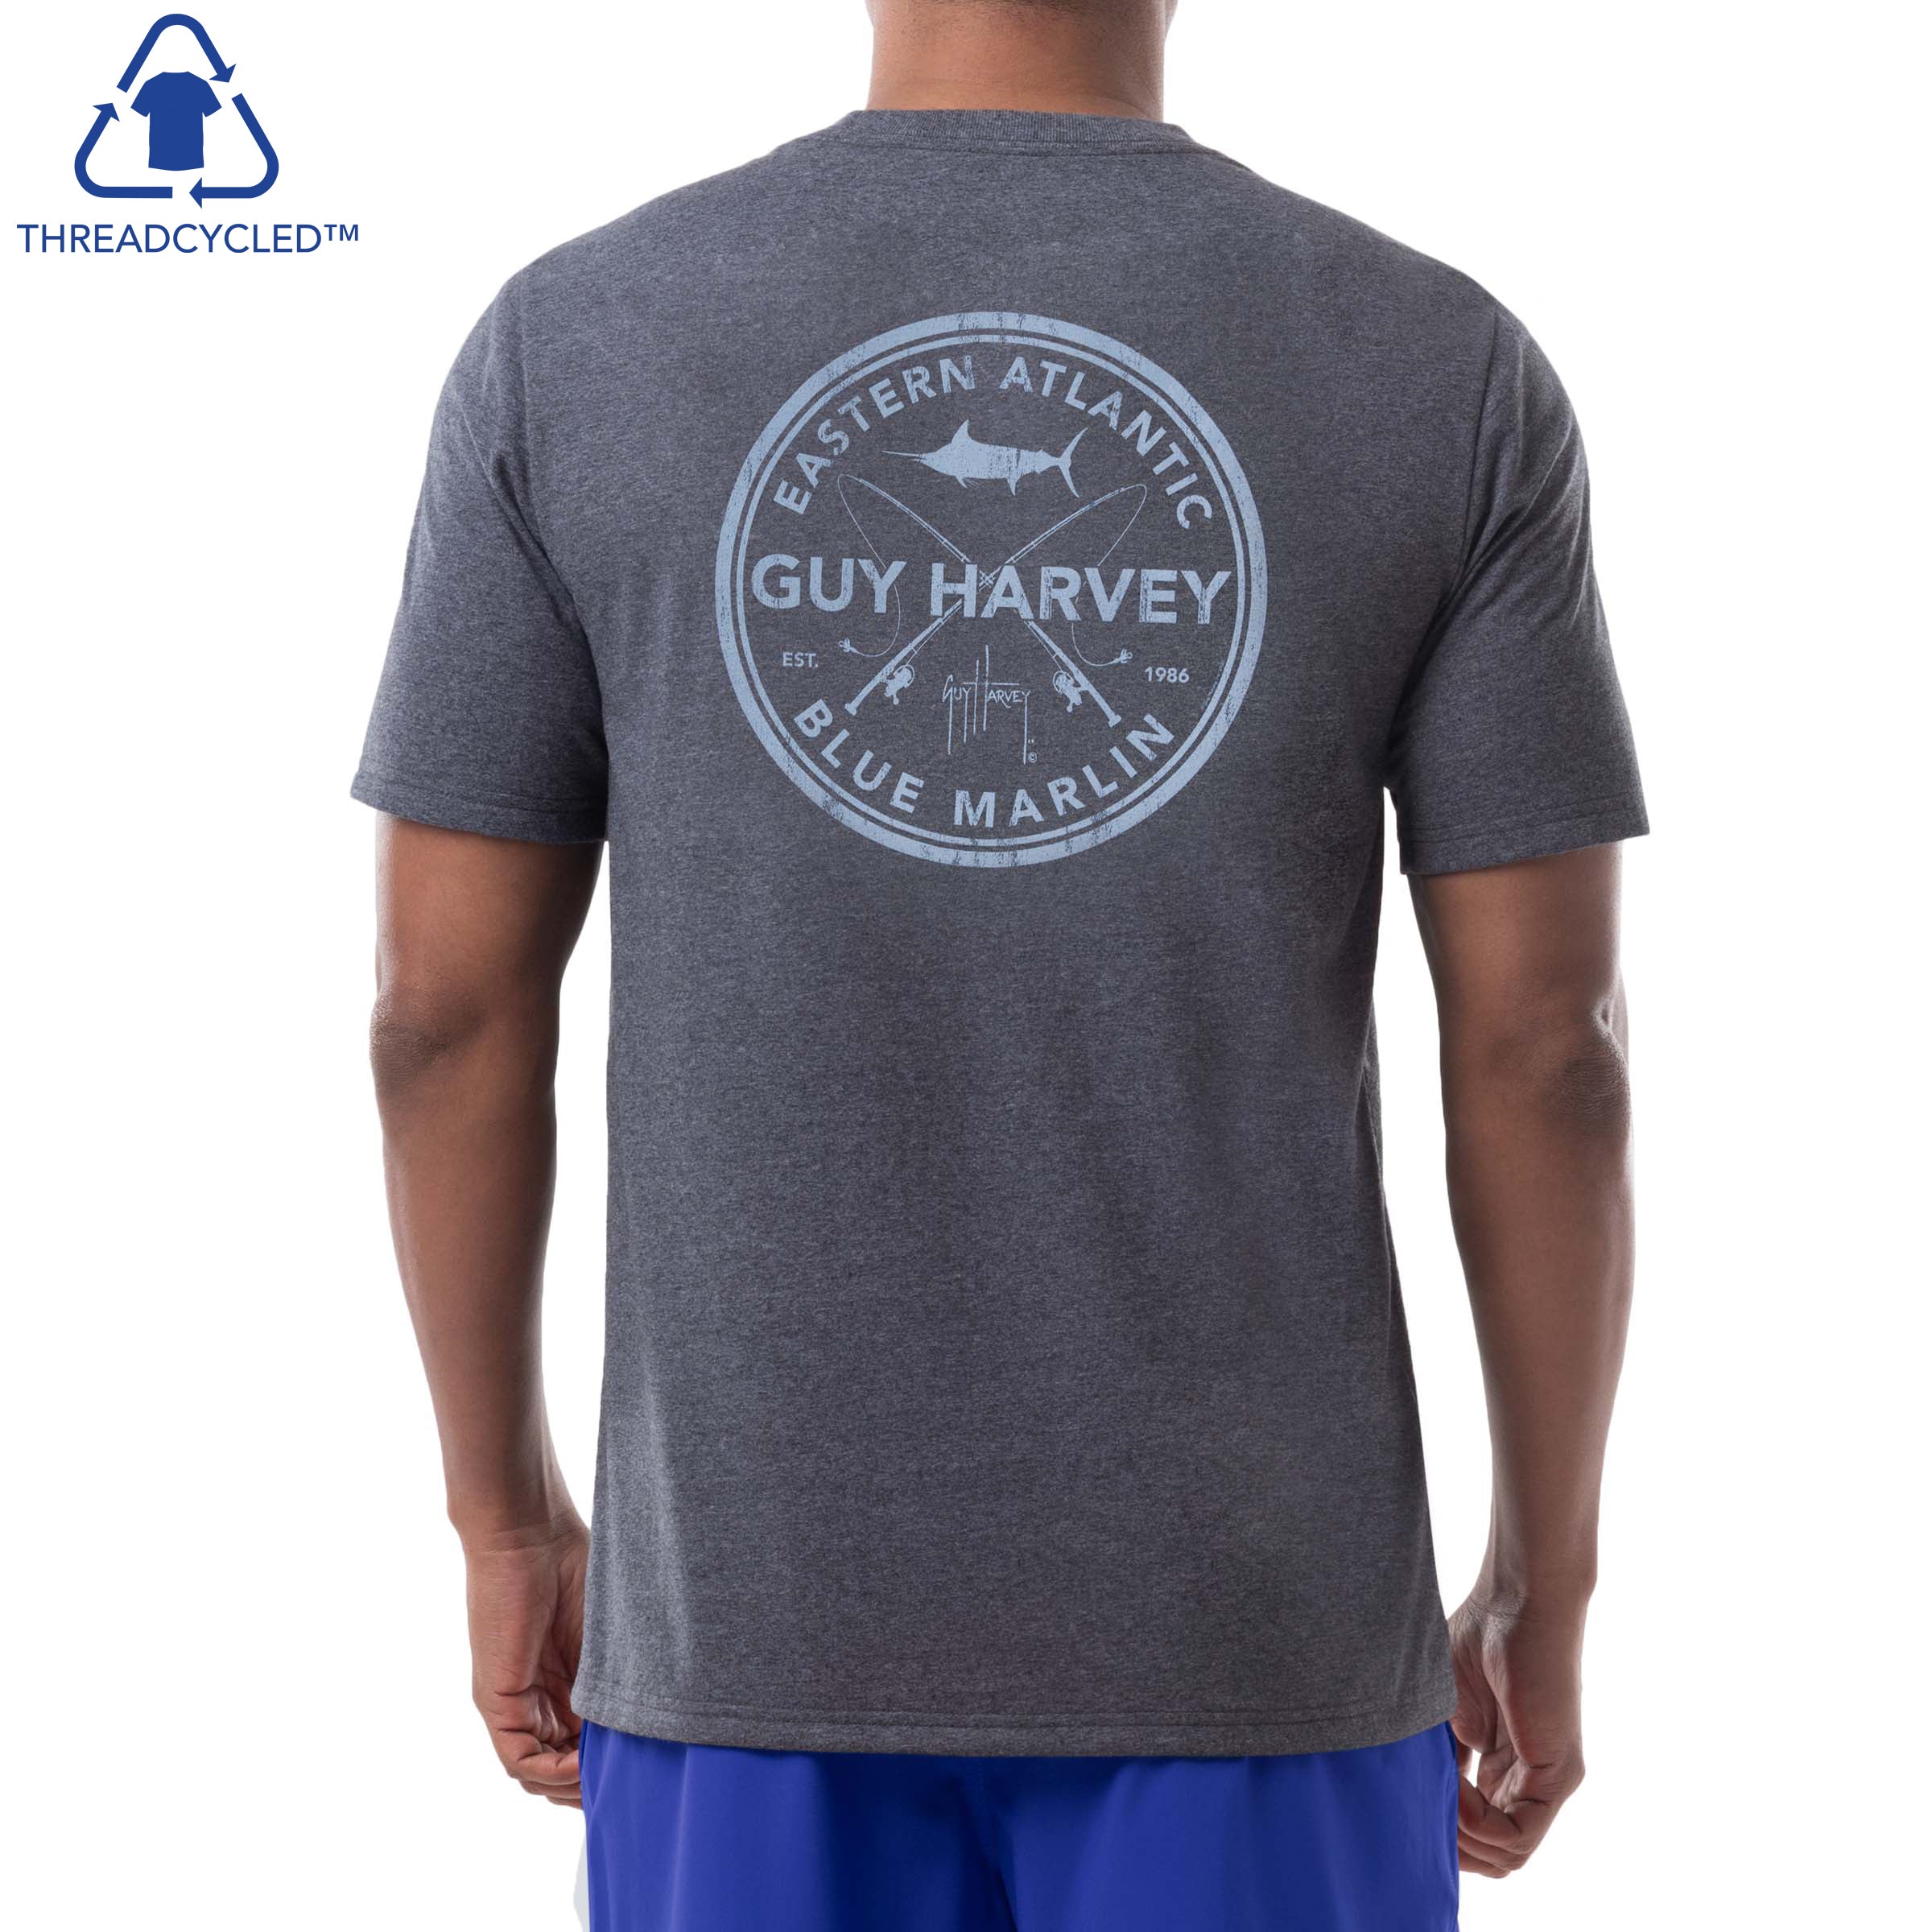 Capt. Harry's Burly Marlin Short Sleeve T-Shirt in – Capt. Harry's Fishing  Supply